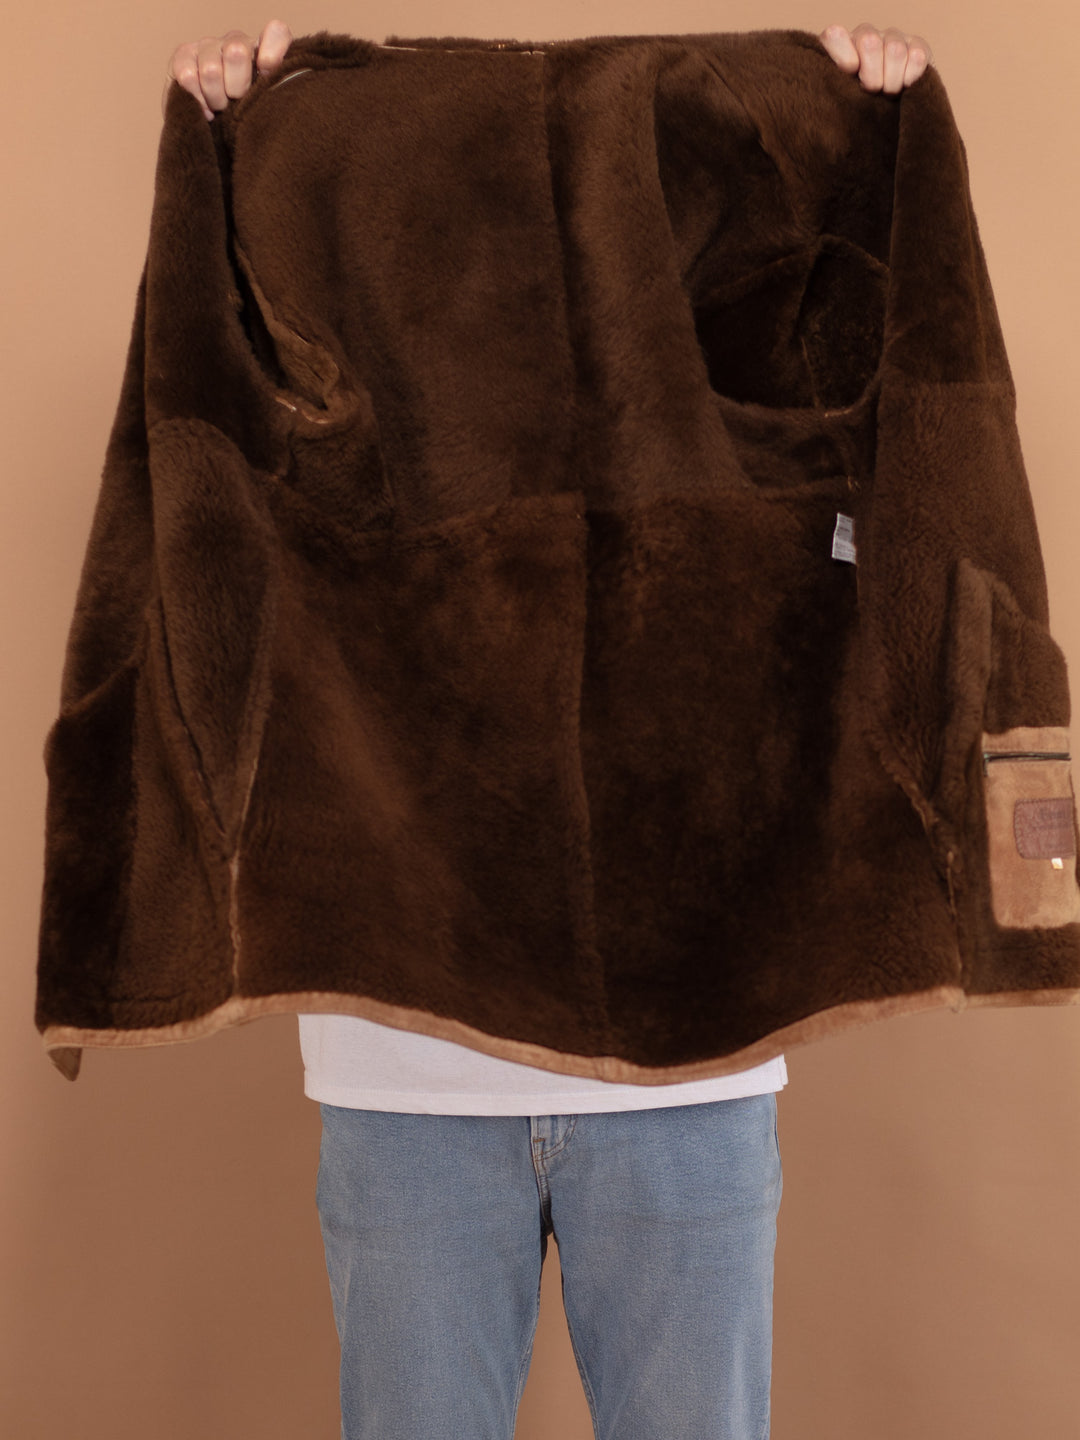 Brown Shearling Coat 70s, Size Large, Men Sheepskin Leather Coat, Button Up Winter Coat, Retro Outerwear, Vintage Fashion, Western Jacket